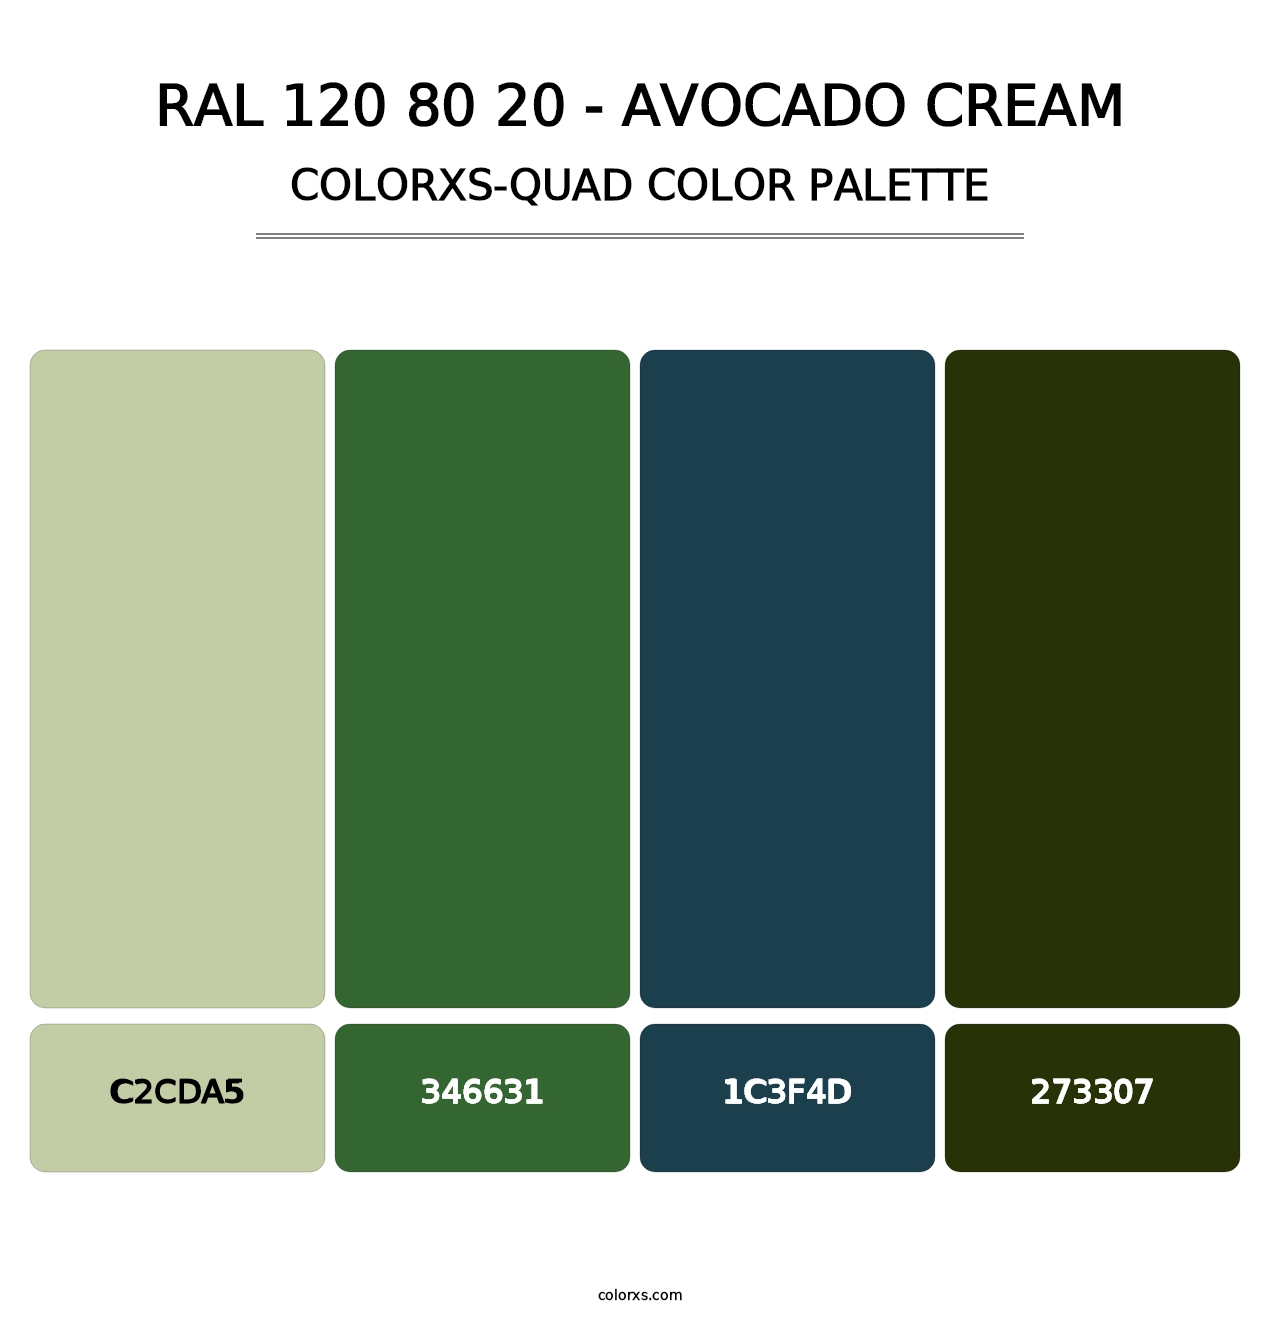 RAL 120 80 20 - Avocado Cream - Colorxs Quad Palette